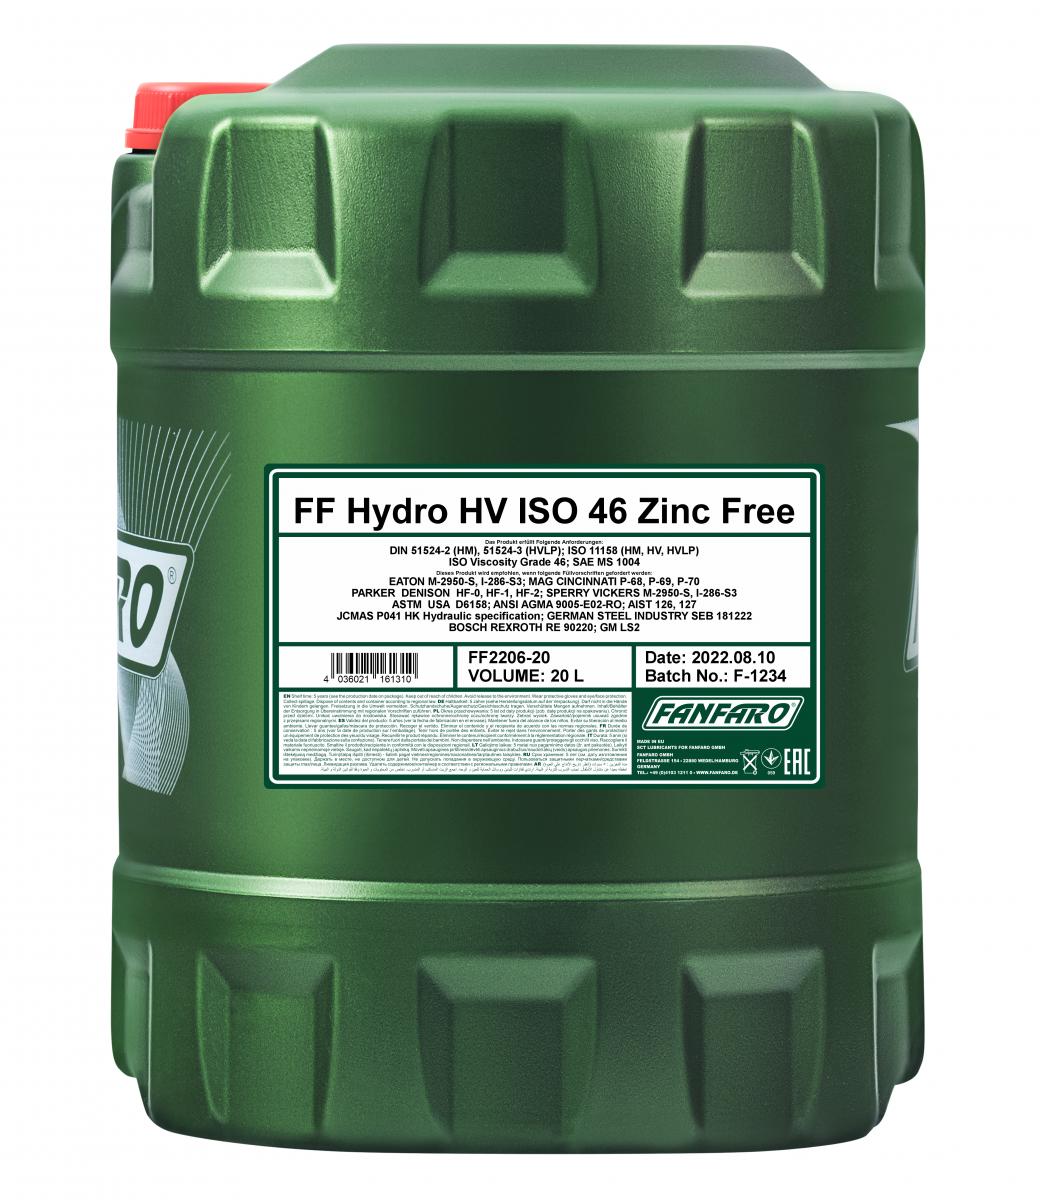 FF Hydro HV ISO 46 Zinc Free